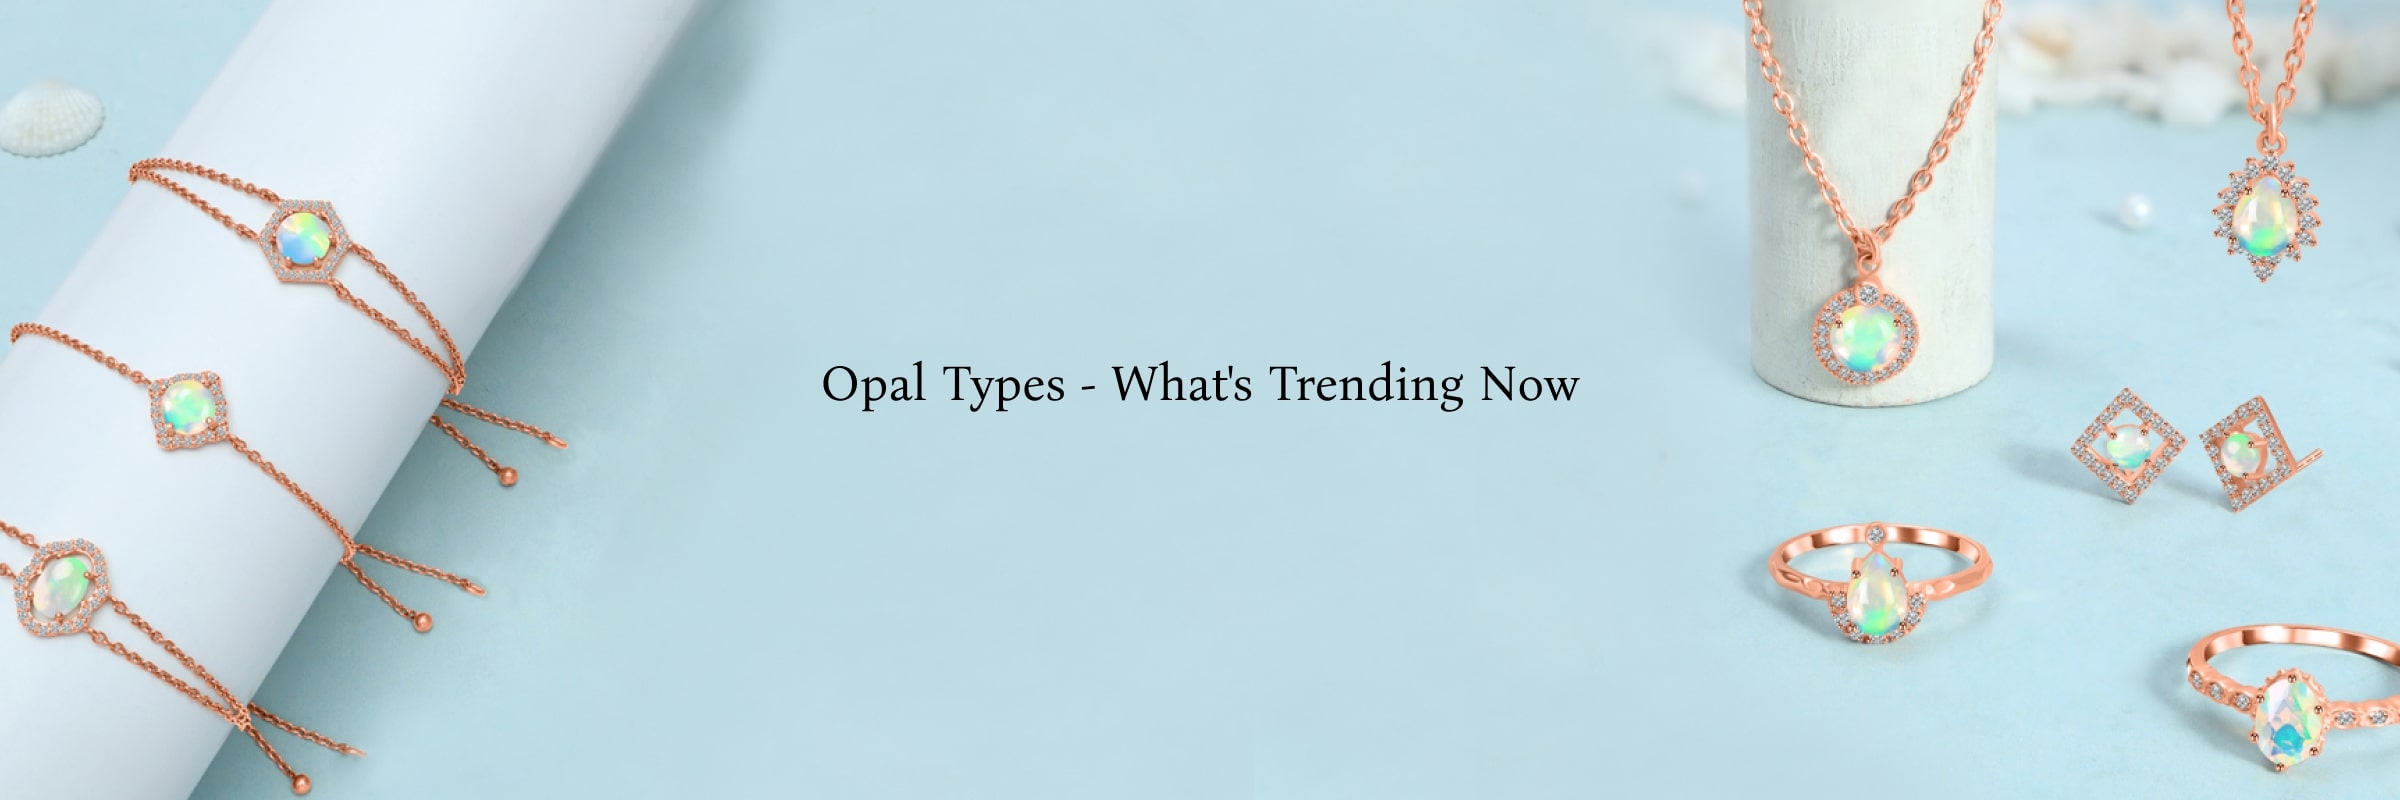 Most Popular Opal Types